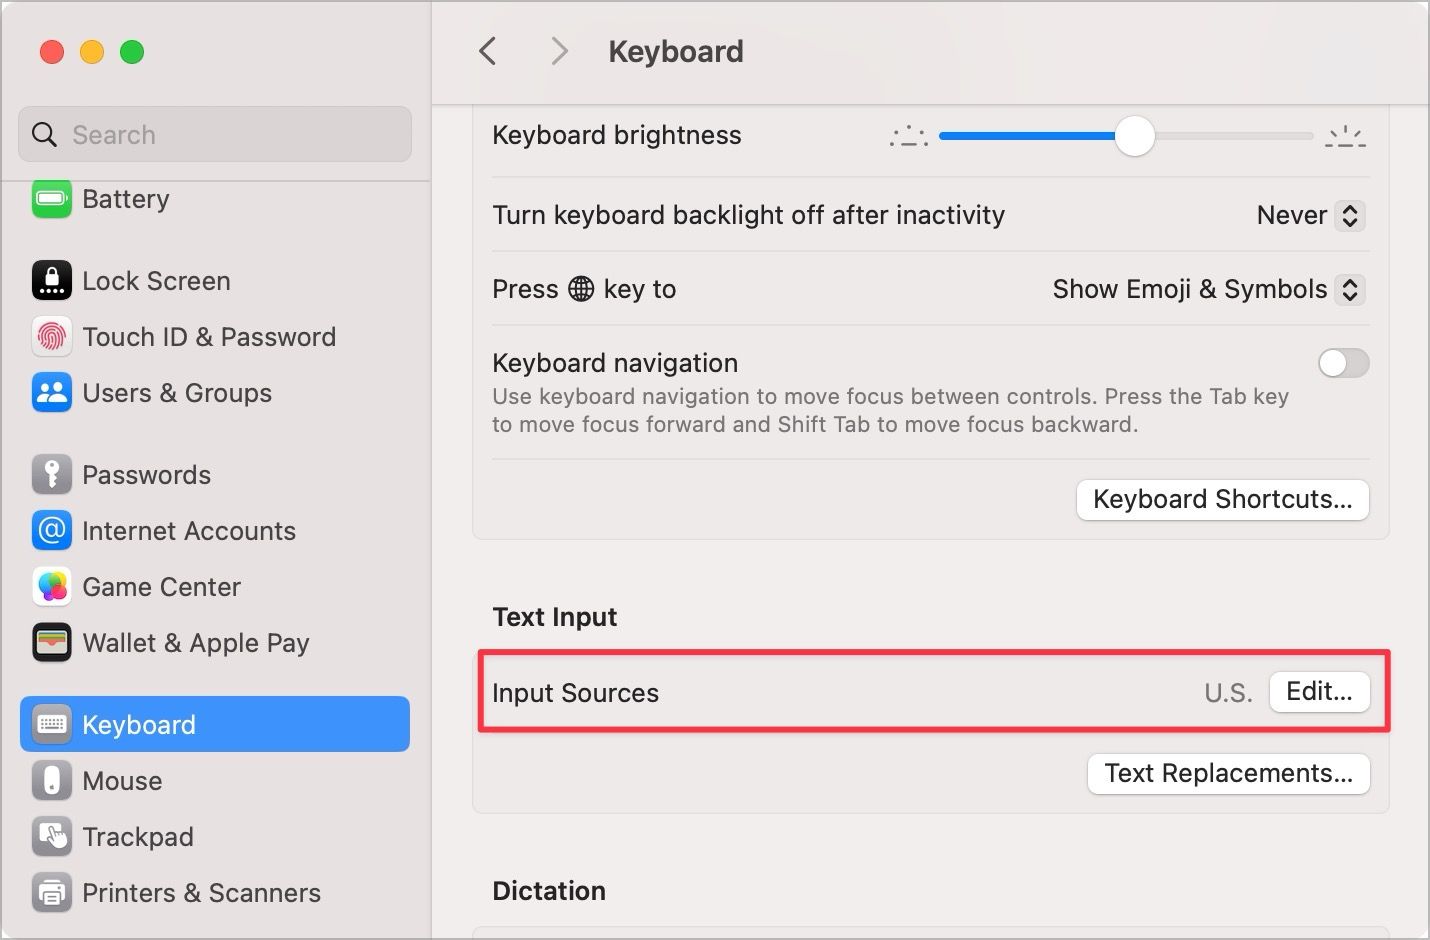 Keyboard setting screenshot showing Input Sources option